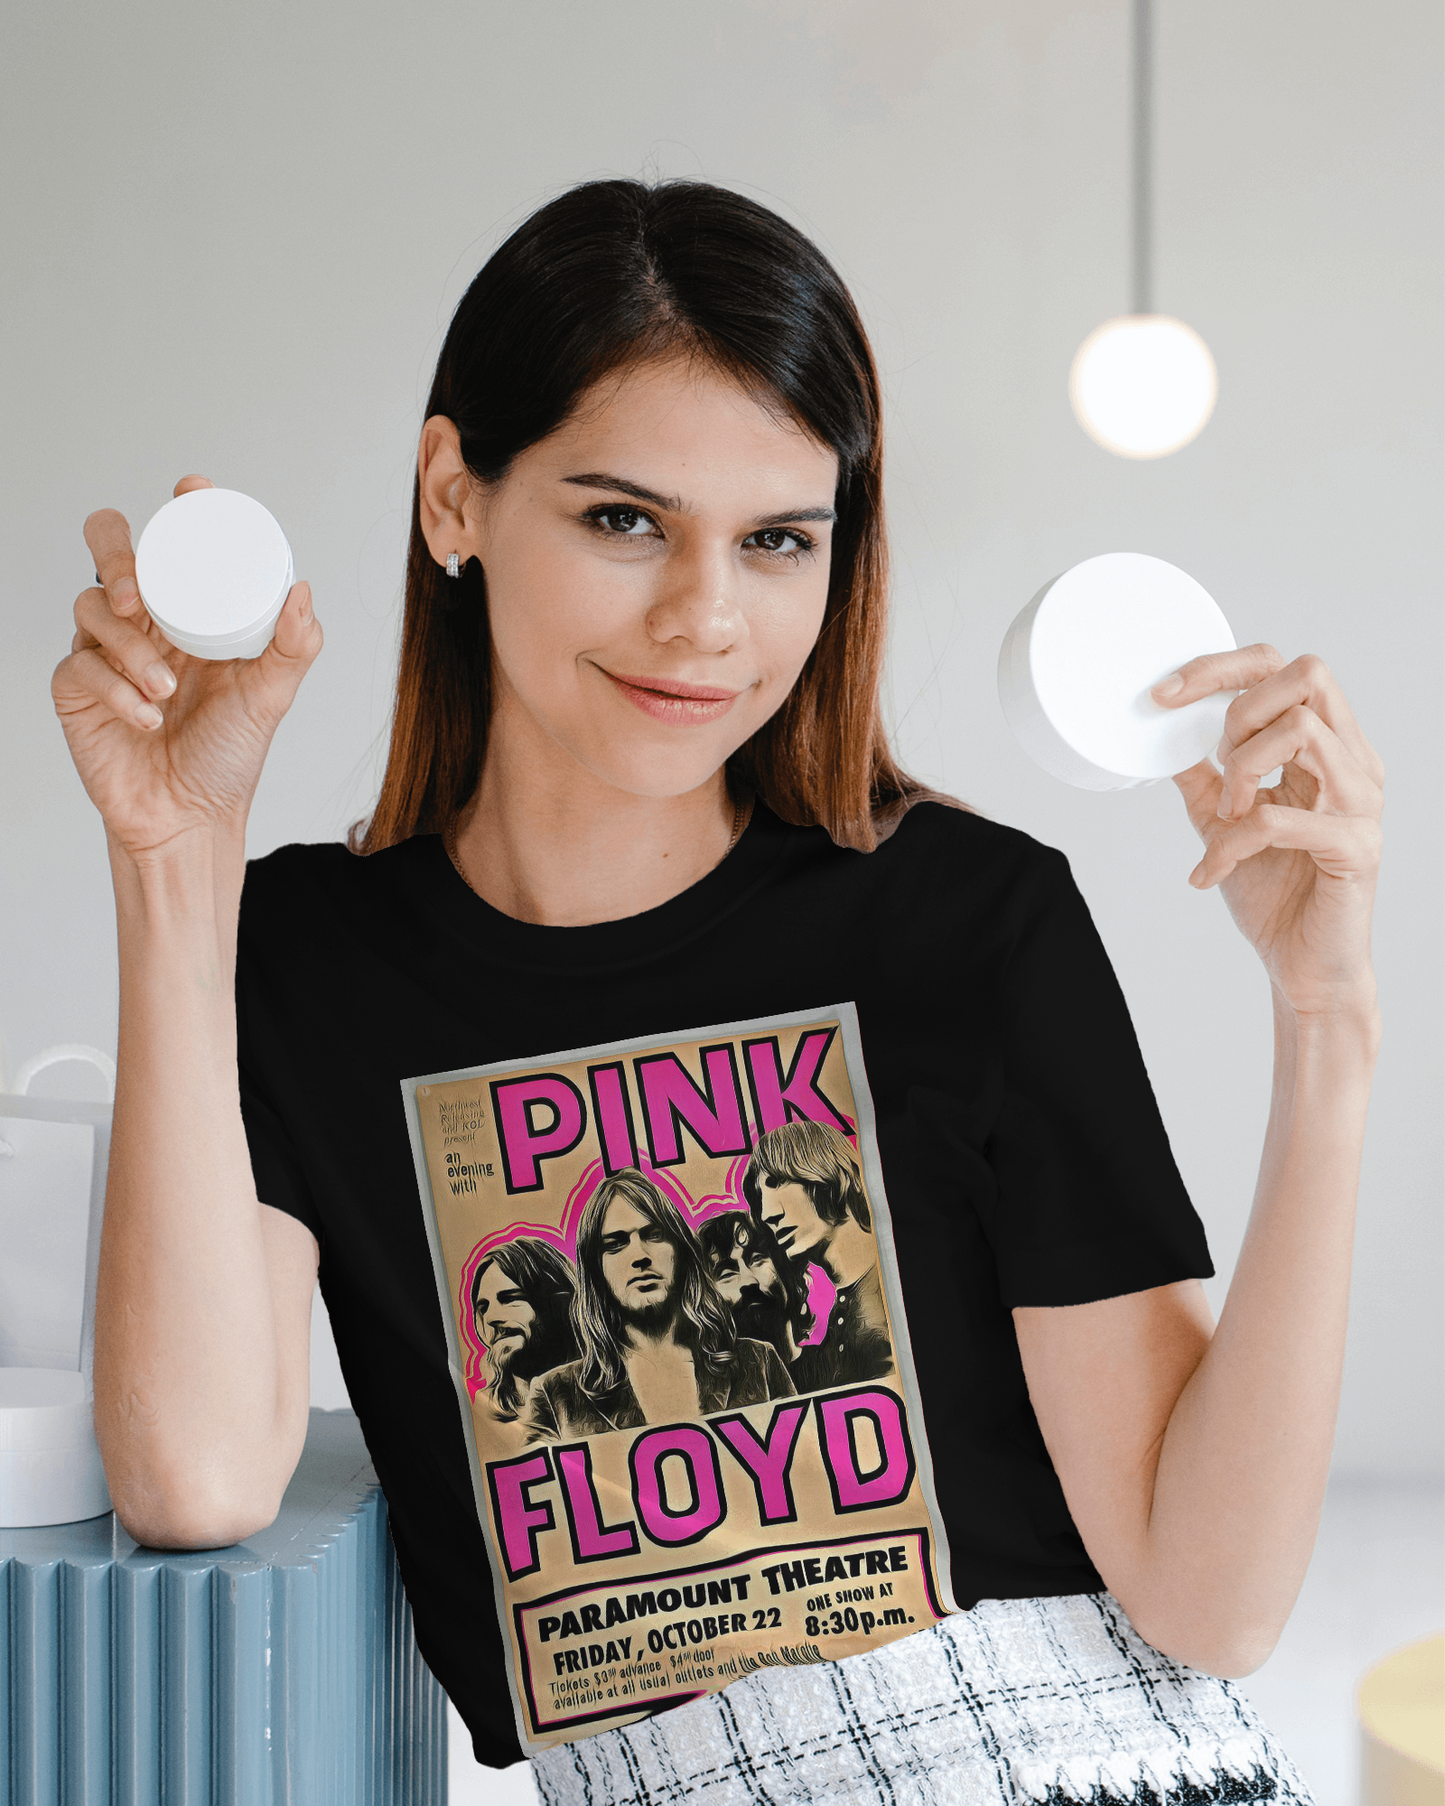 Pink Floyd 4 | T-shirt | Music | Unisex